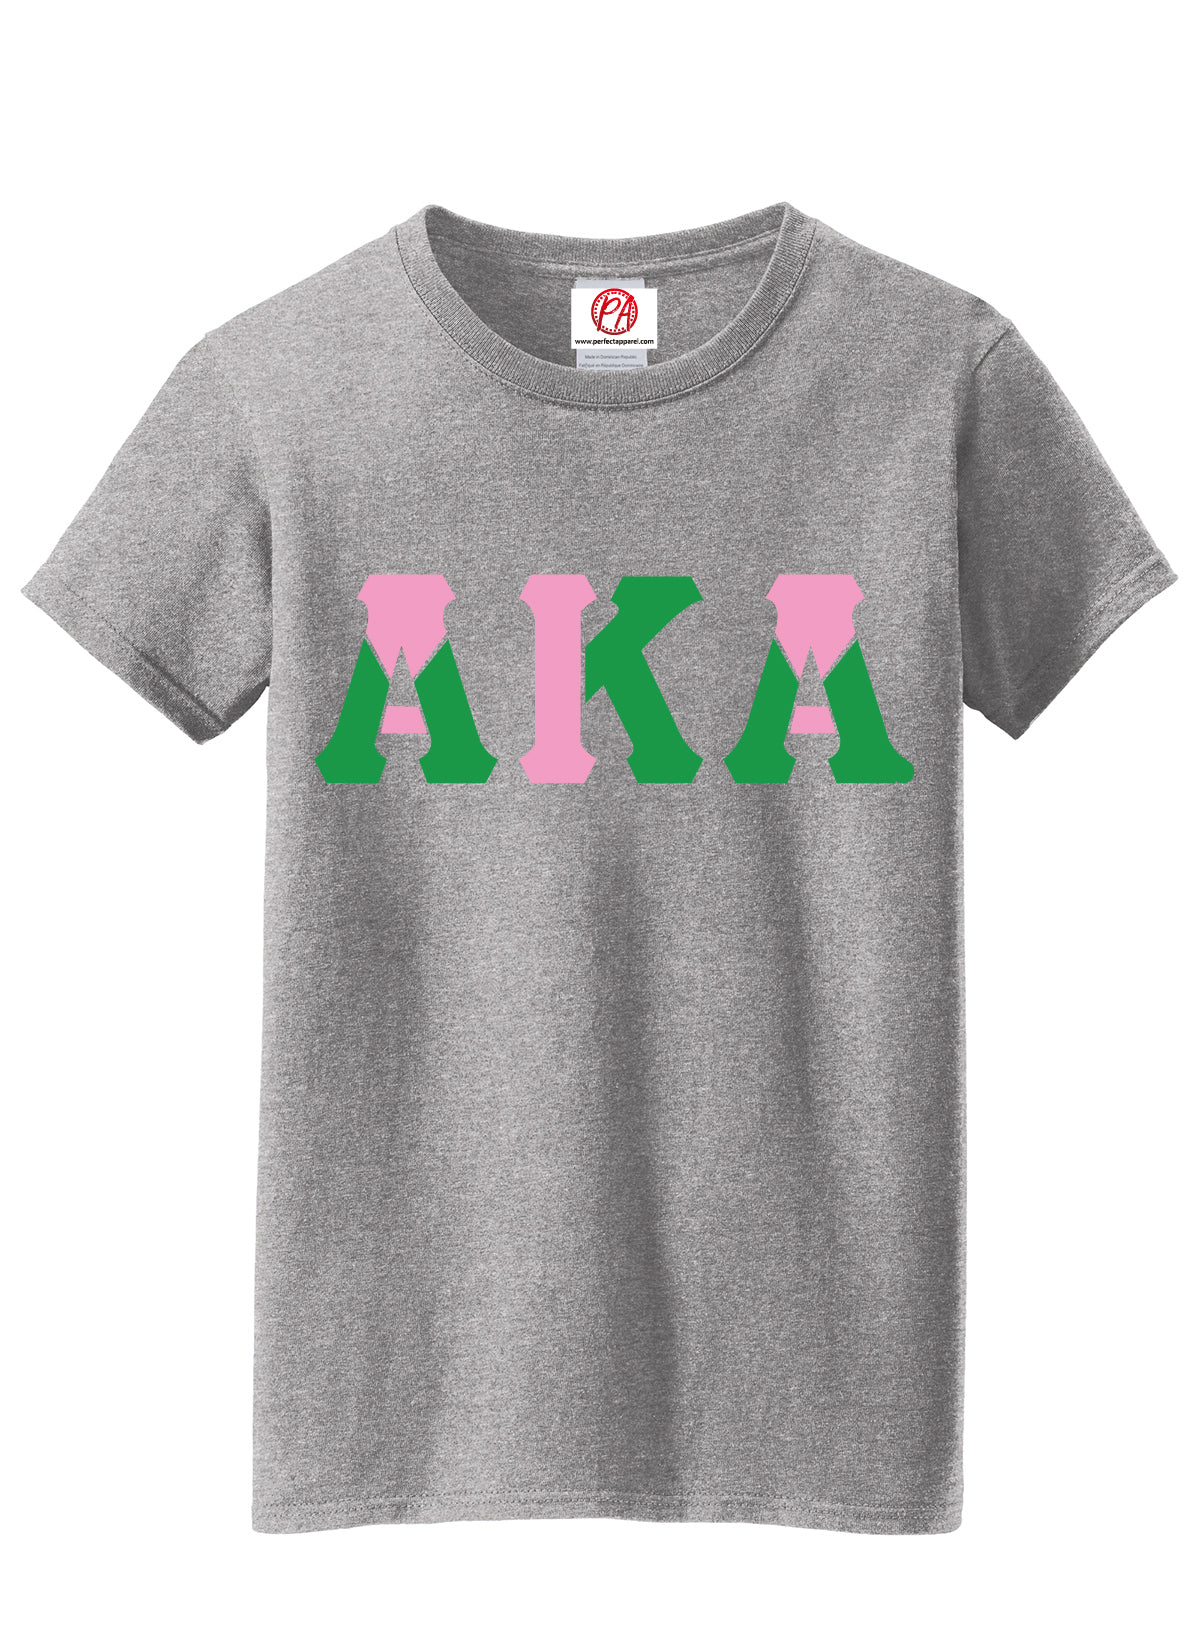 AKA Green Monogram Color Block V-neck t-shirt